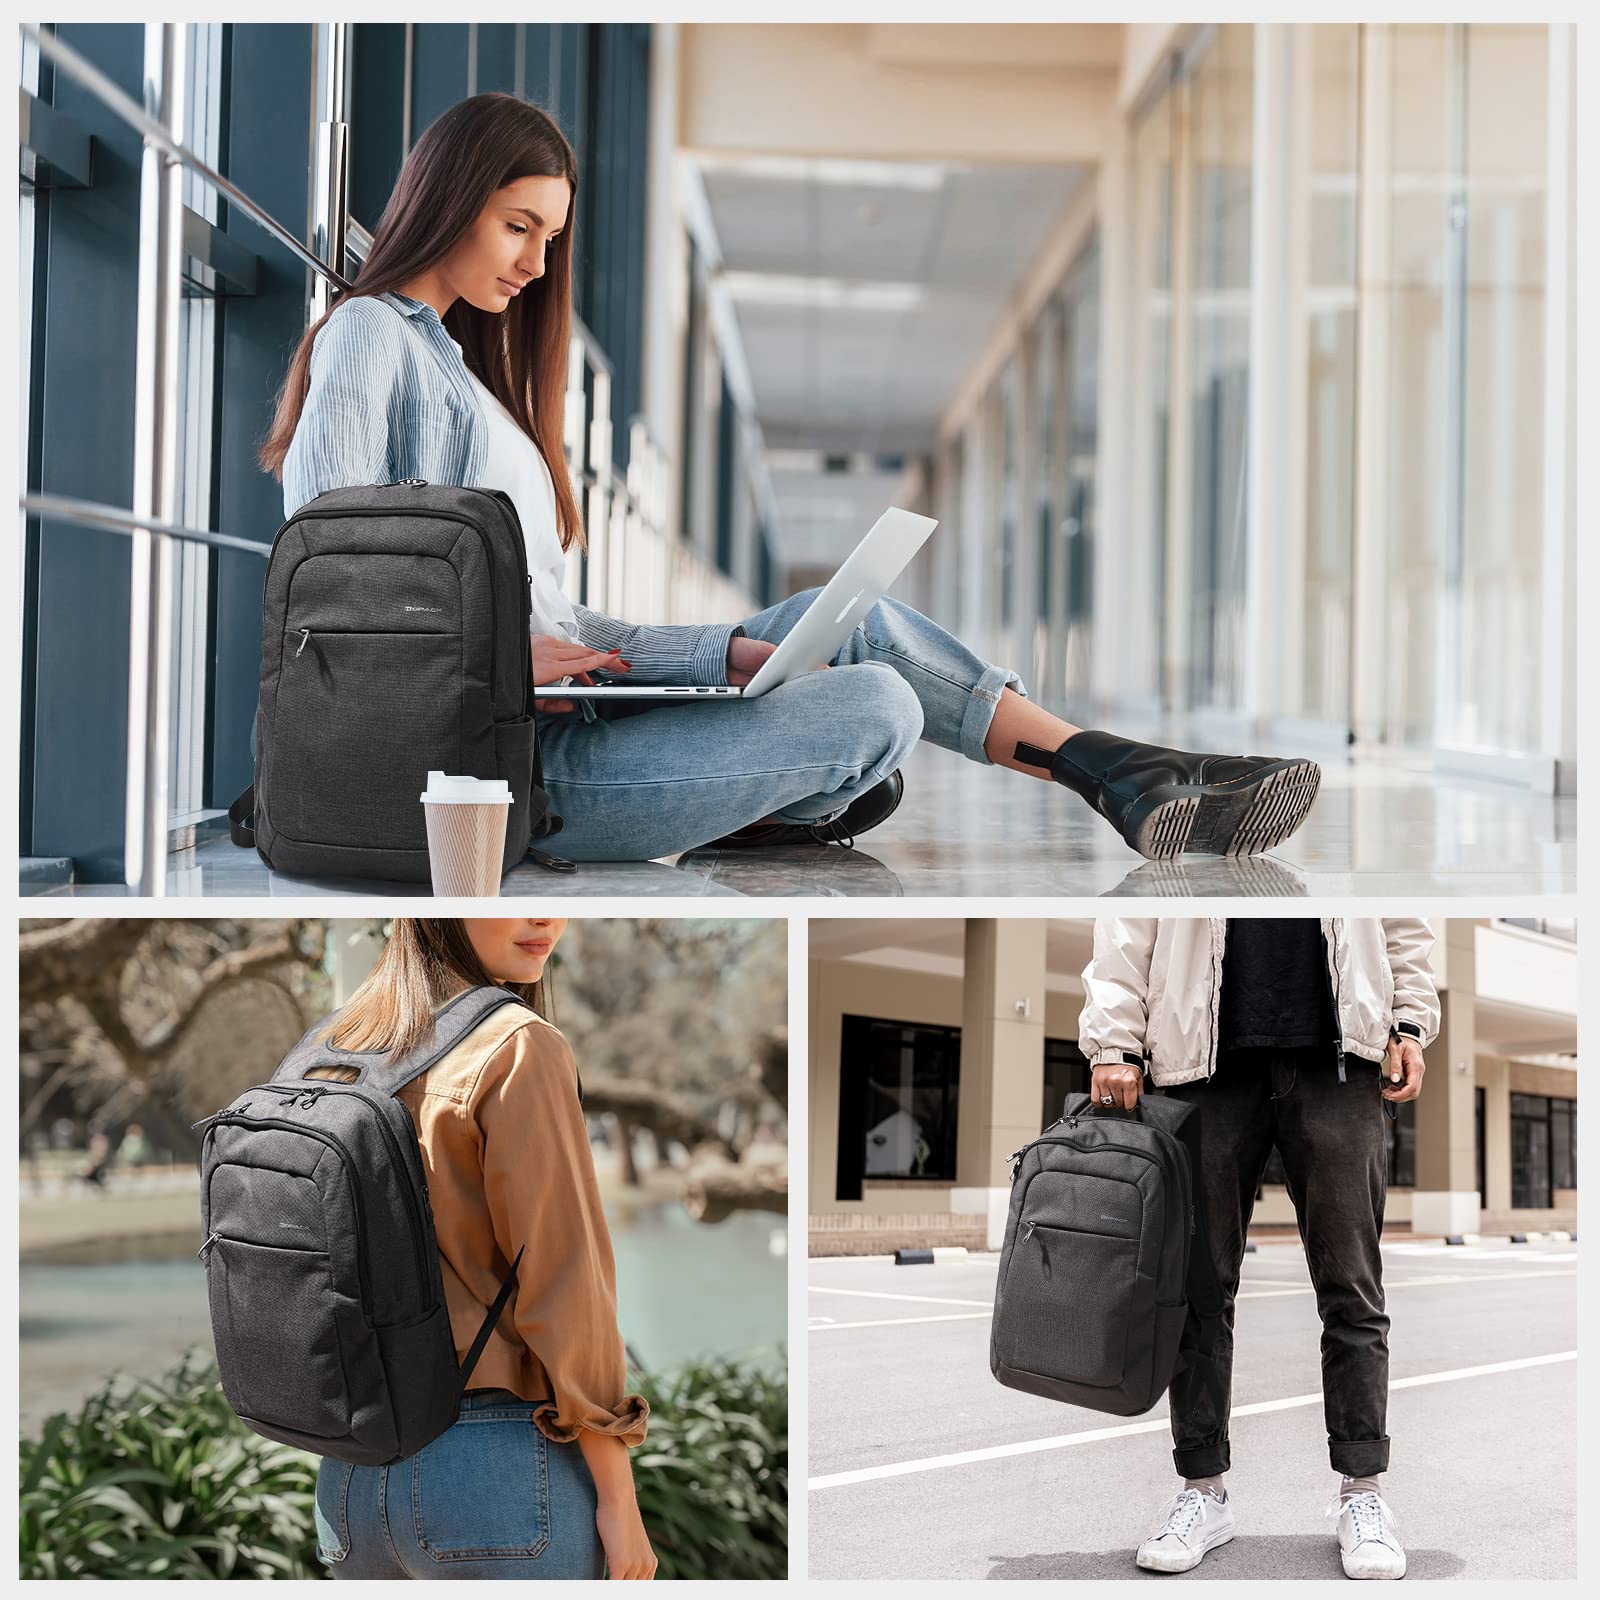 Kopack Slim Laptop Backpack for Men Women, 15.6 inch Theft Proof Lightweight Laptop Backpack with USB Charging Port, Business Travel College Commute Work Bag Daypack, Grey Black